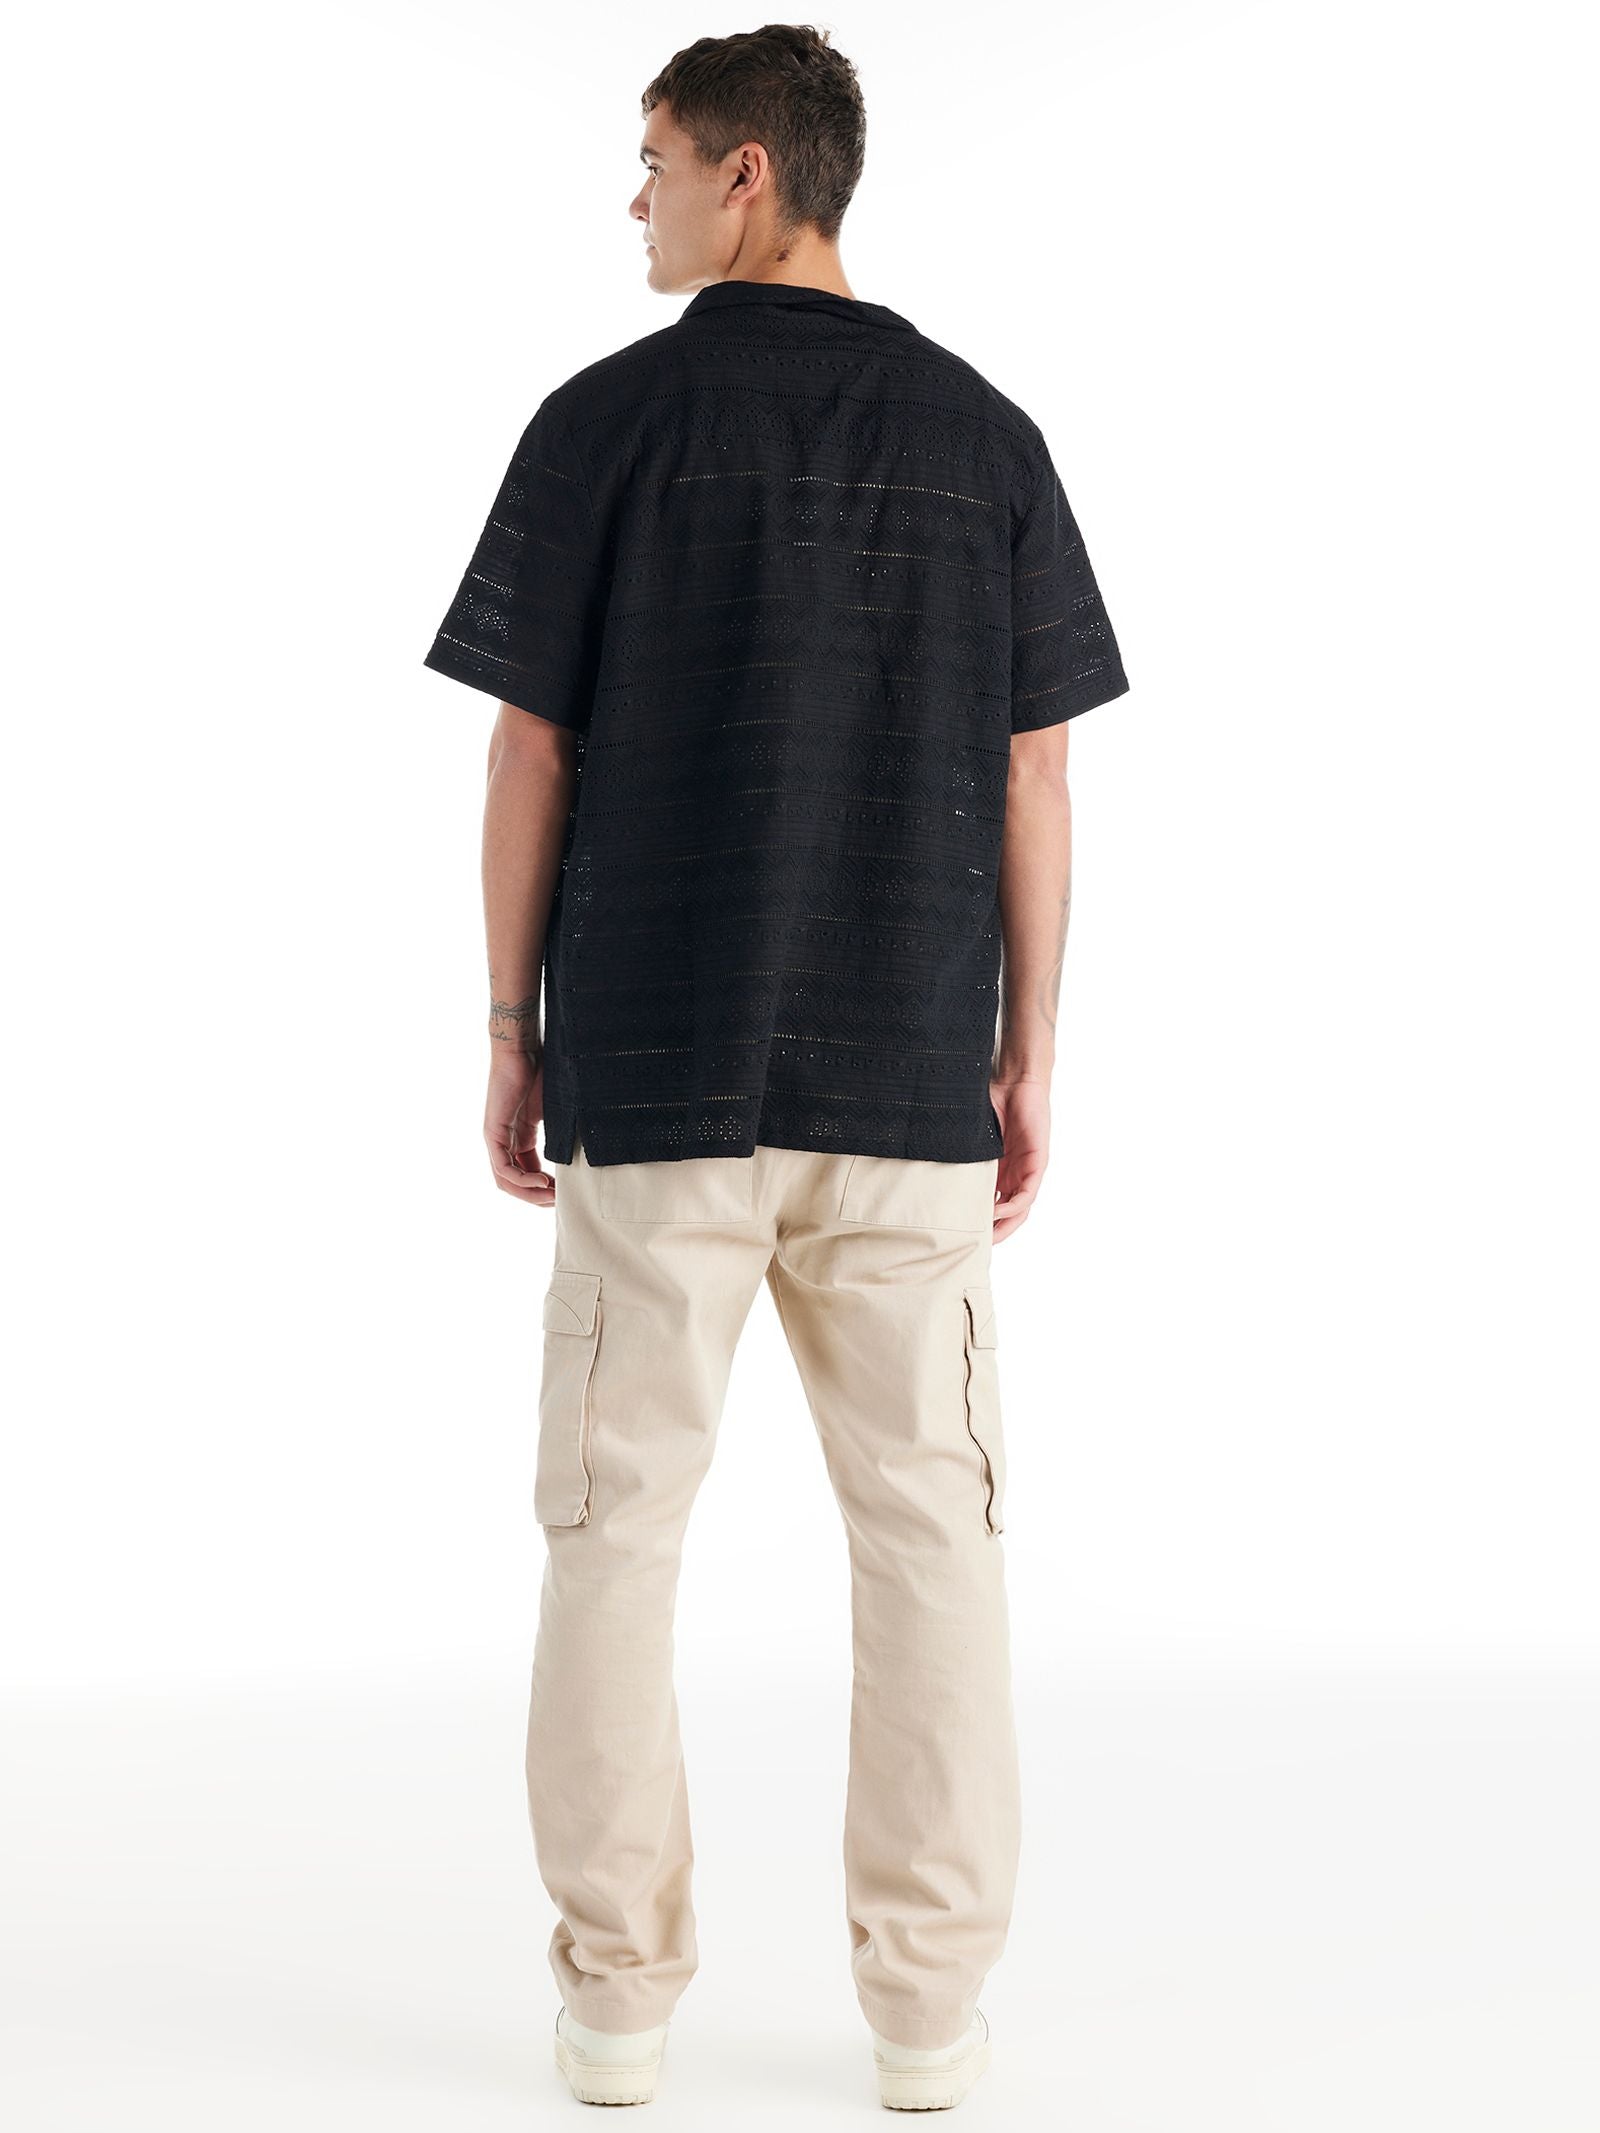 Pallazzo Short Sleeve Shirt in Black